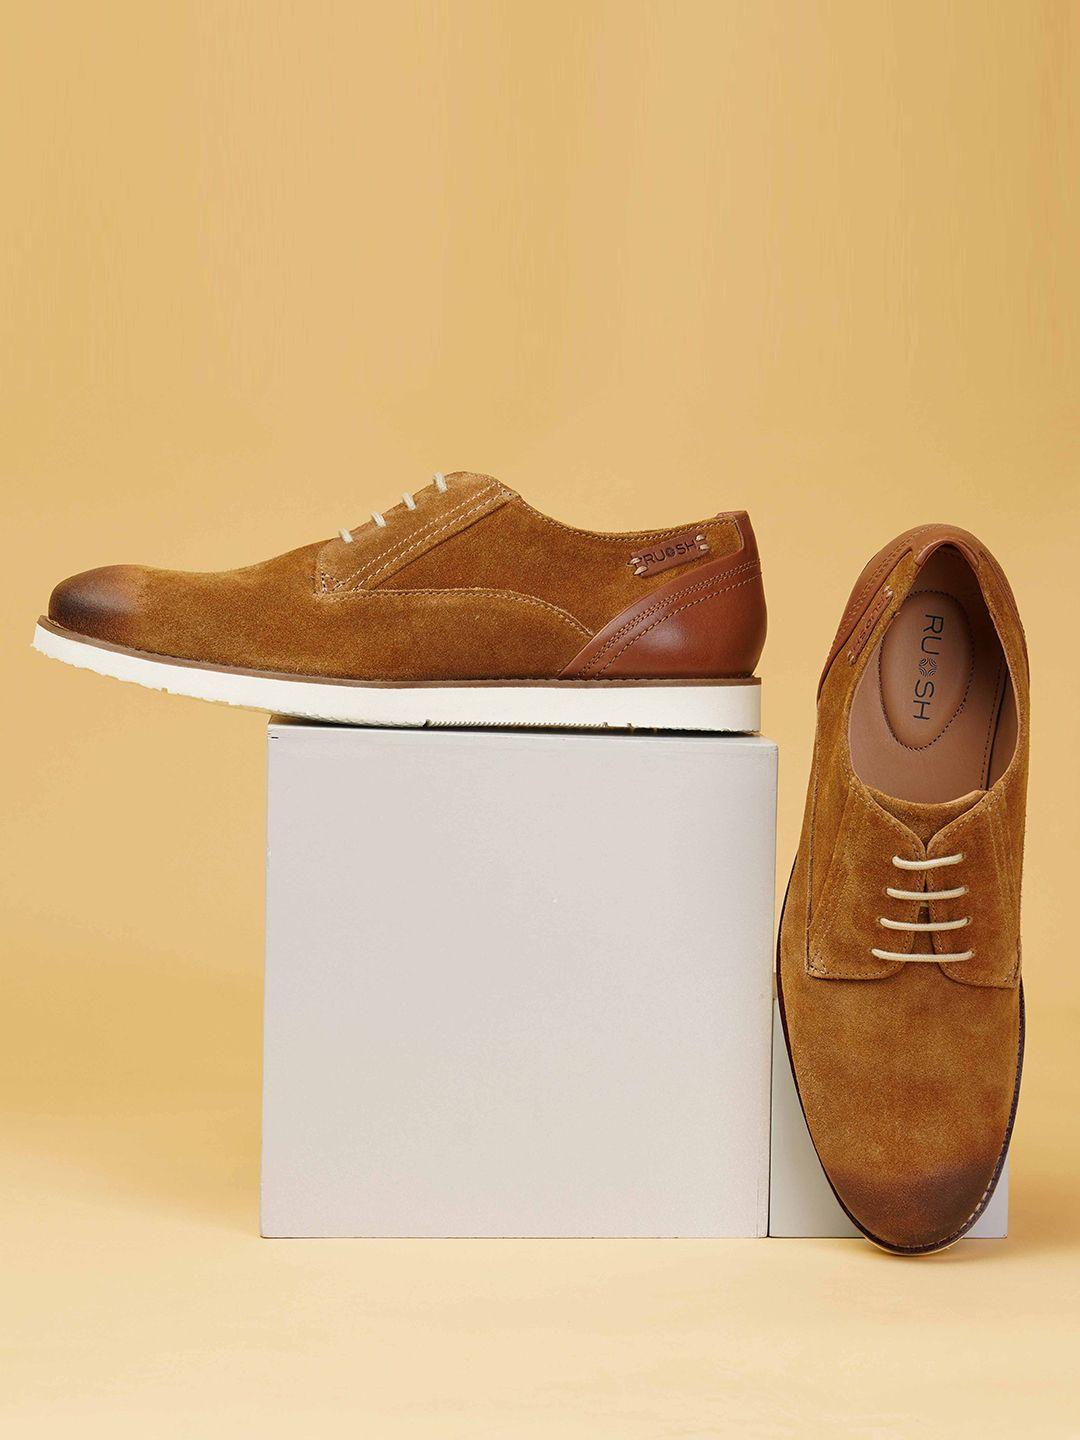 ruosh-men-nice-comfort-insole-contrast-sole-leather-sneakers